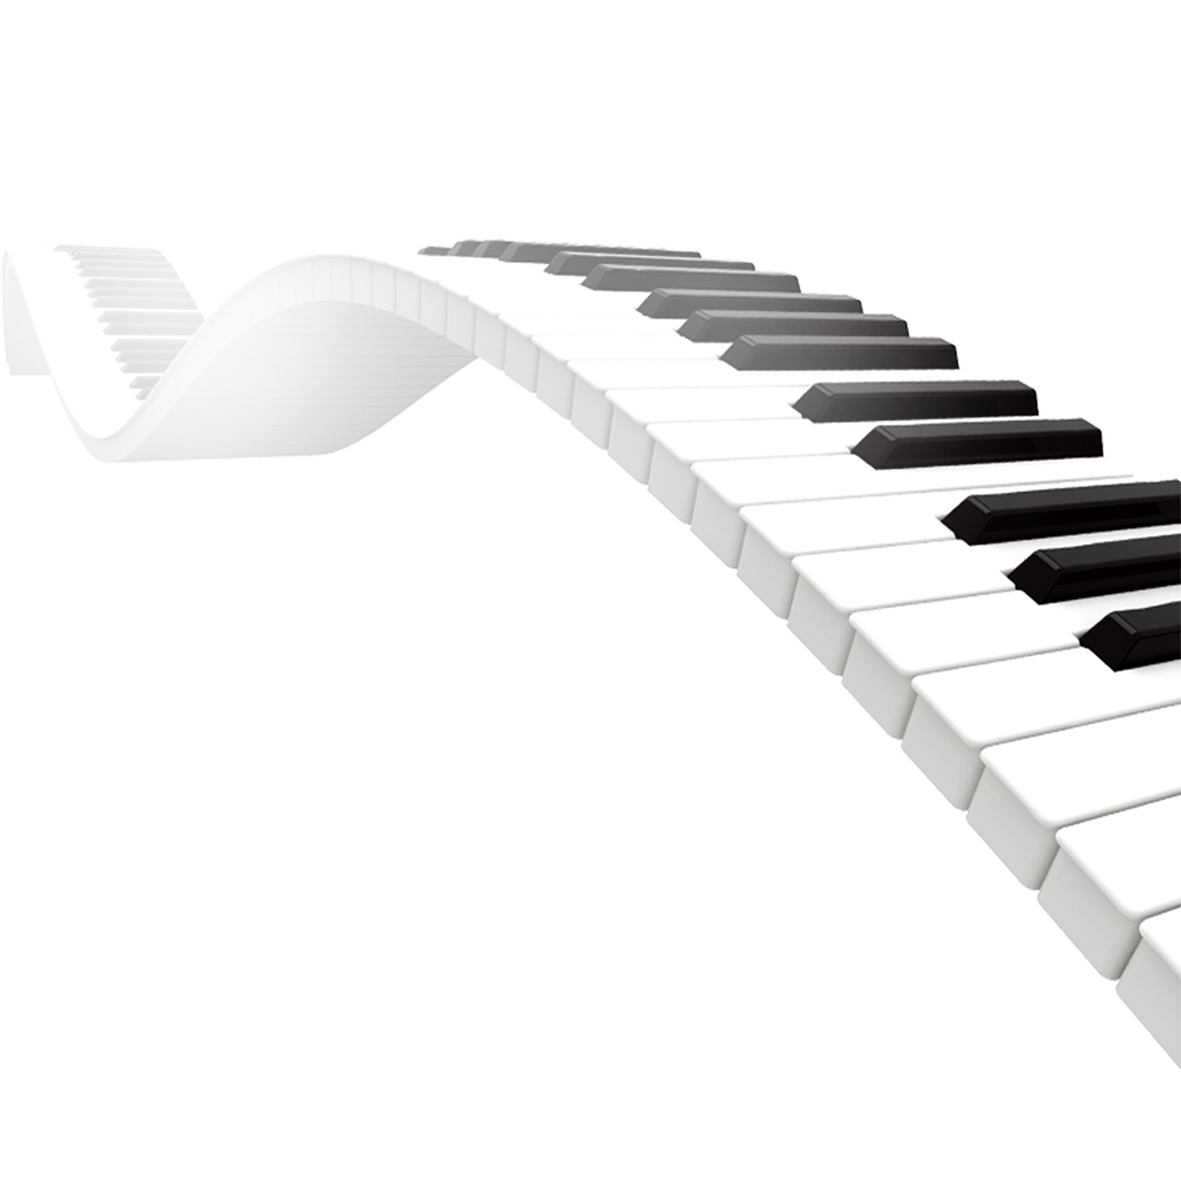 Piano Music Keyboard PNG Pic